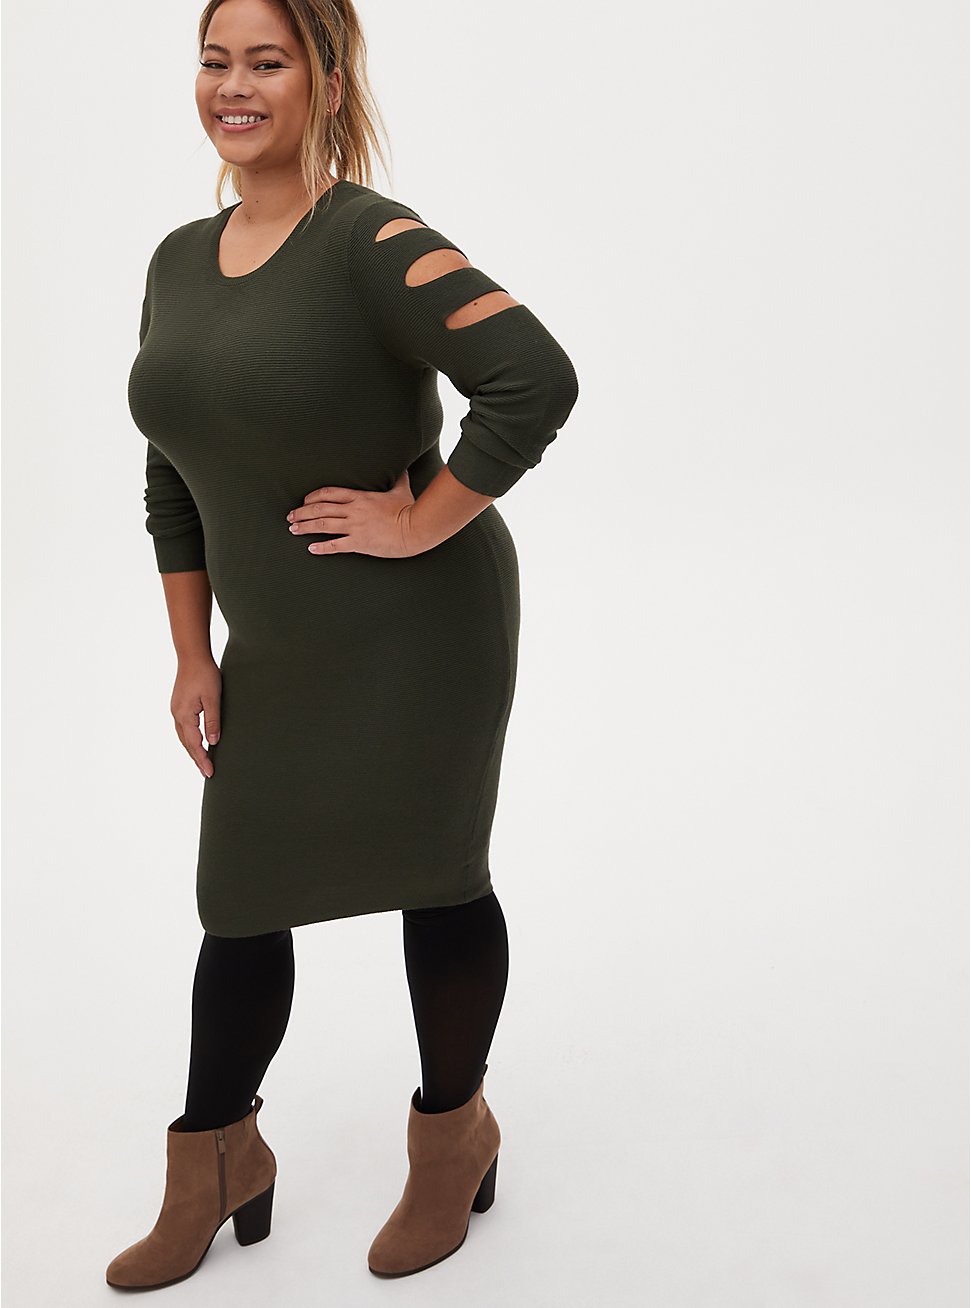 Olive Green Cutout Sweater Dress - Torrid